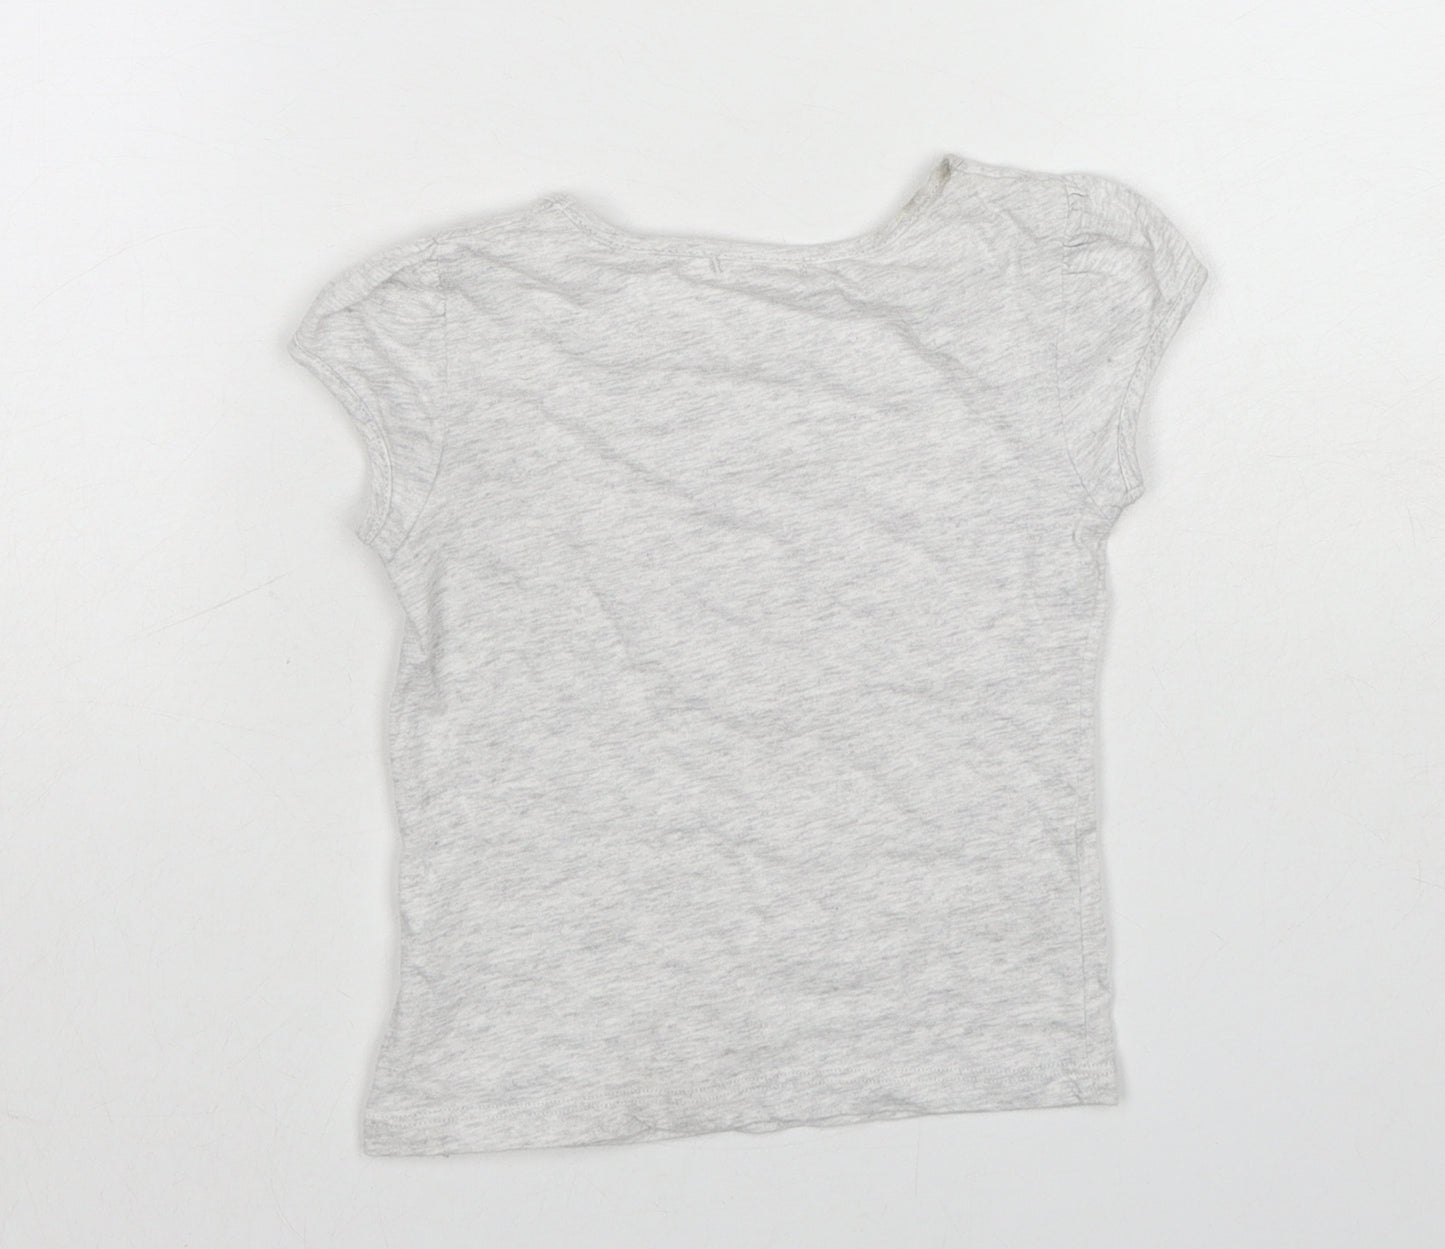 Billieblush Girls Grey Cotton Basic T-Shirt Size 4 Years Boat Neck Pullover